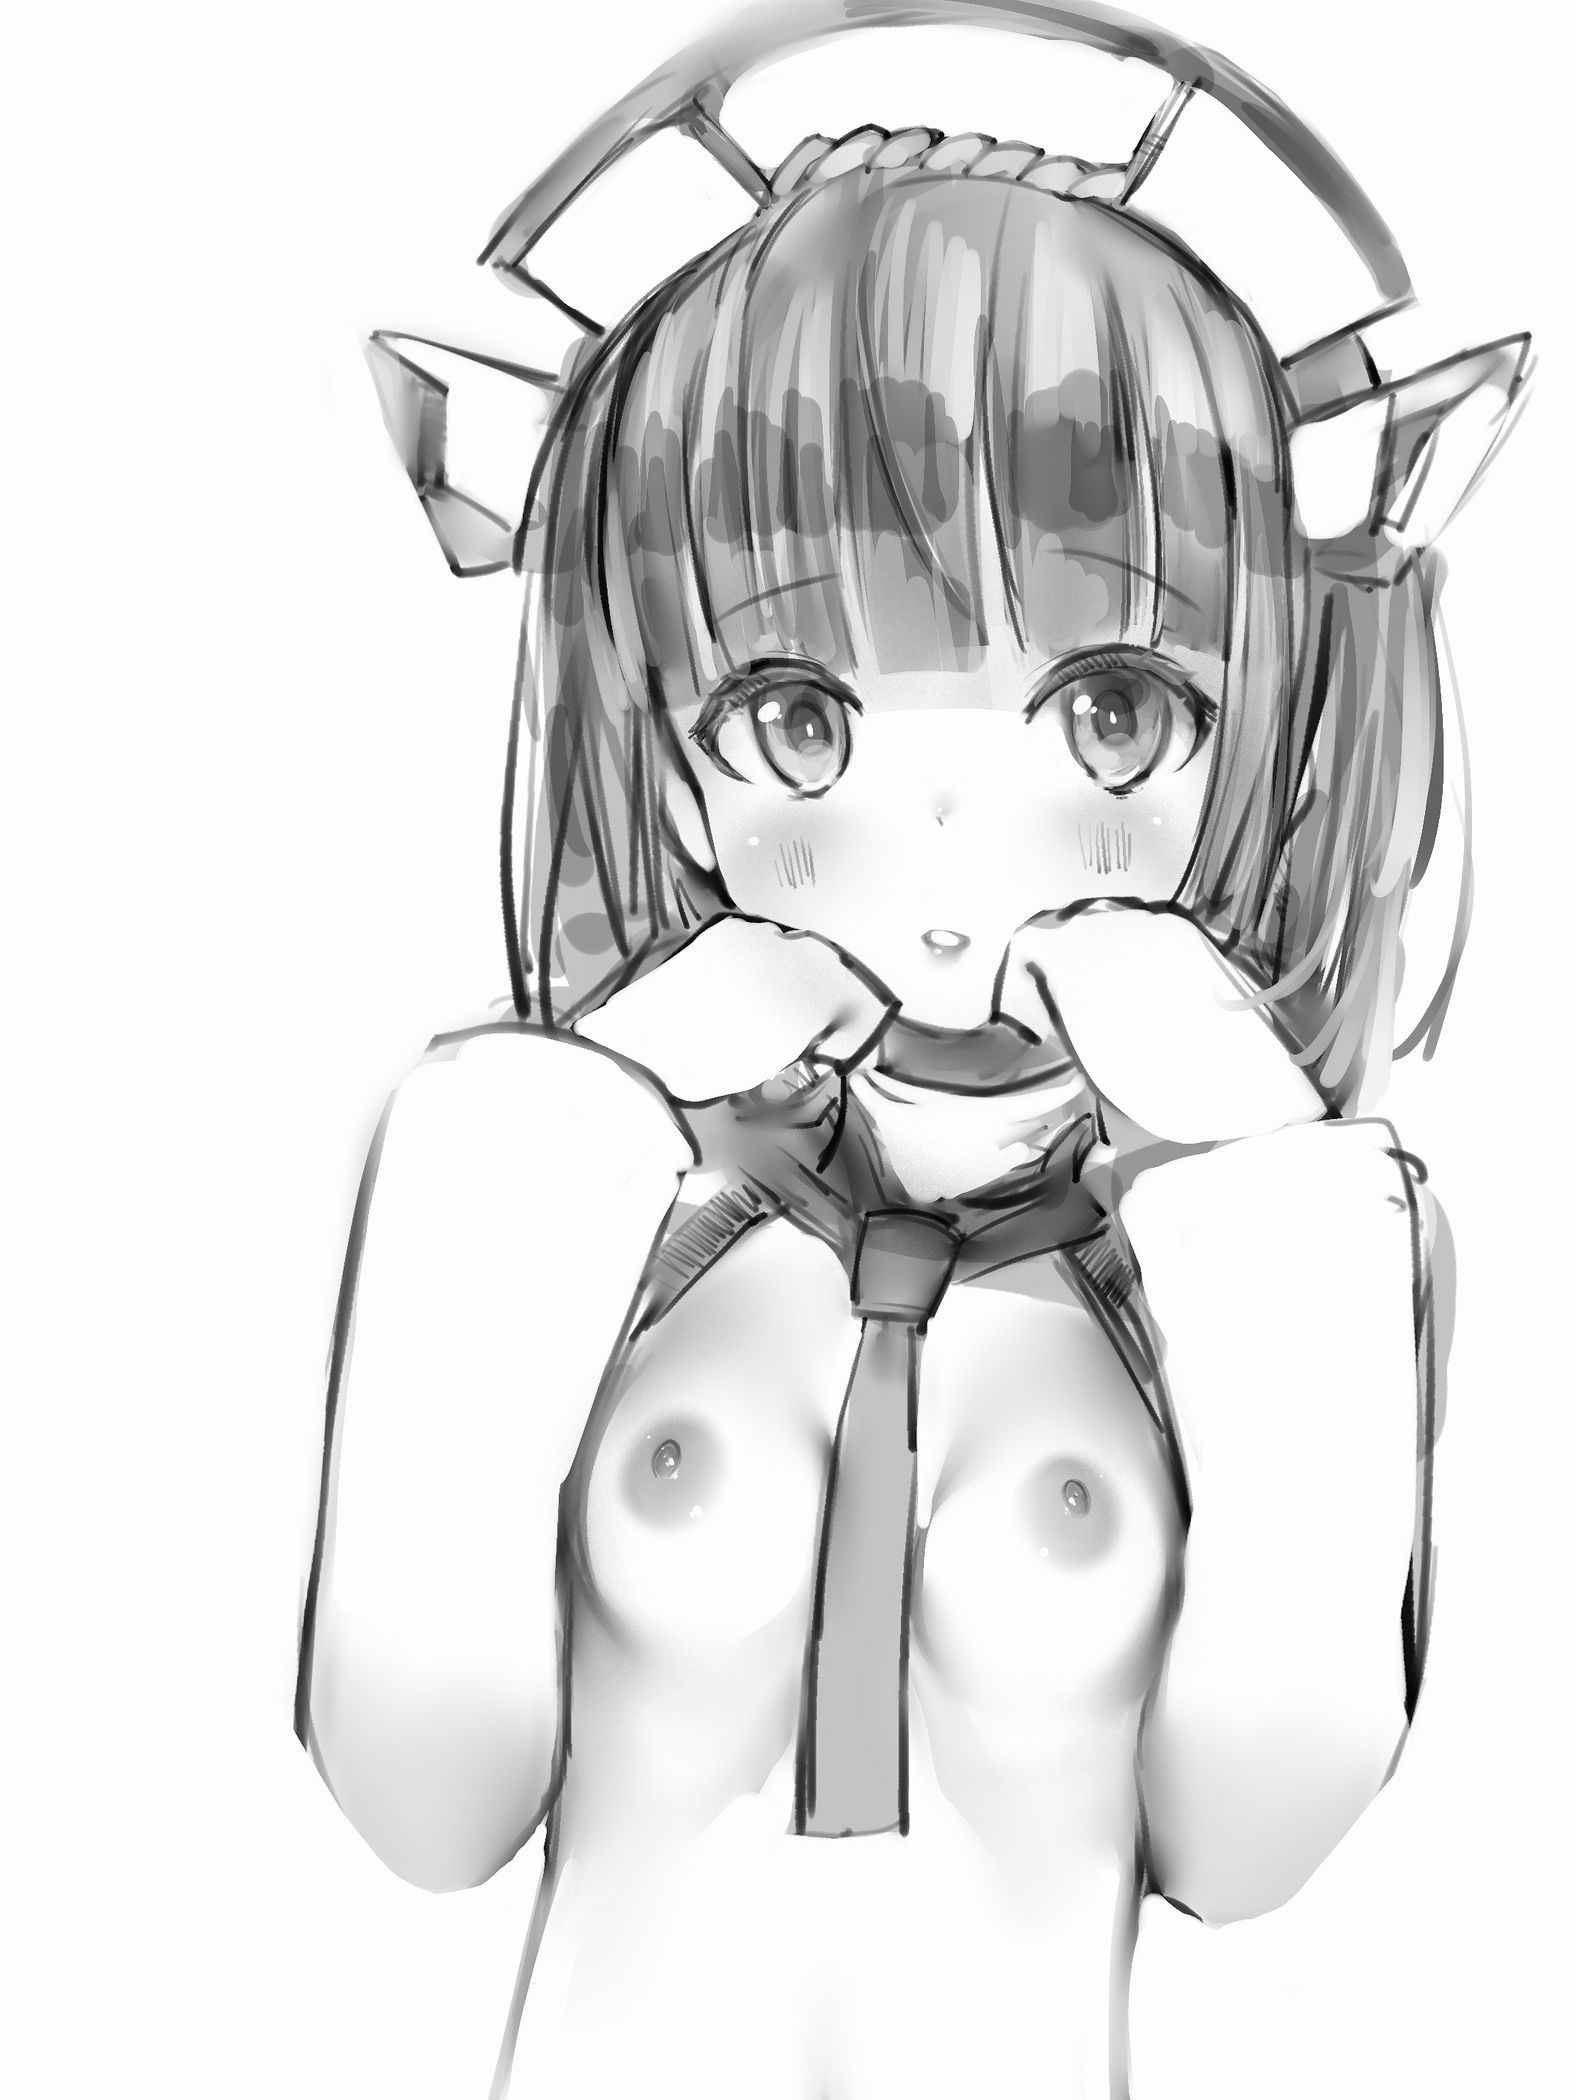 【Aikawa Aihana-chan】Secondary erotic image of Alice Gear Aegis JC3 year old and owner of a young loli body Aikawa Aihana-chan 25